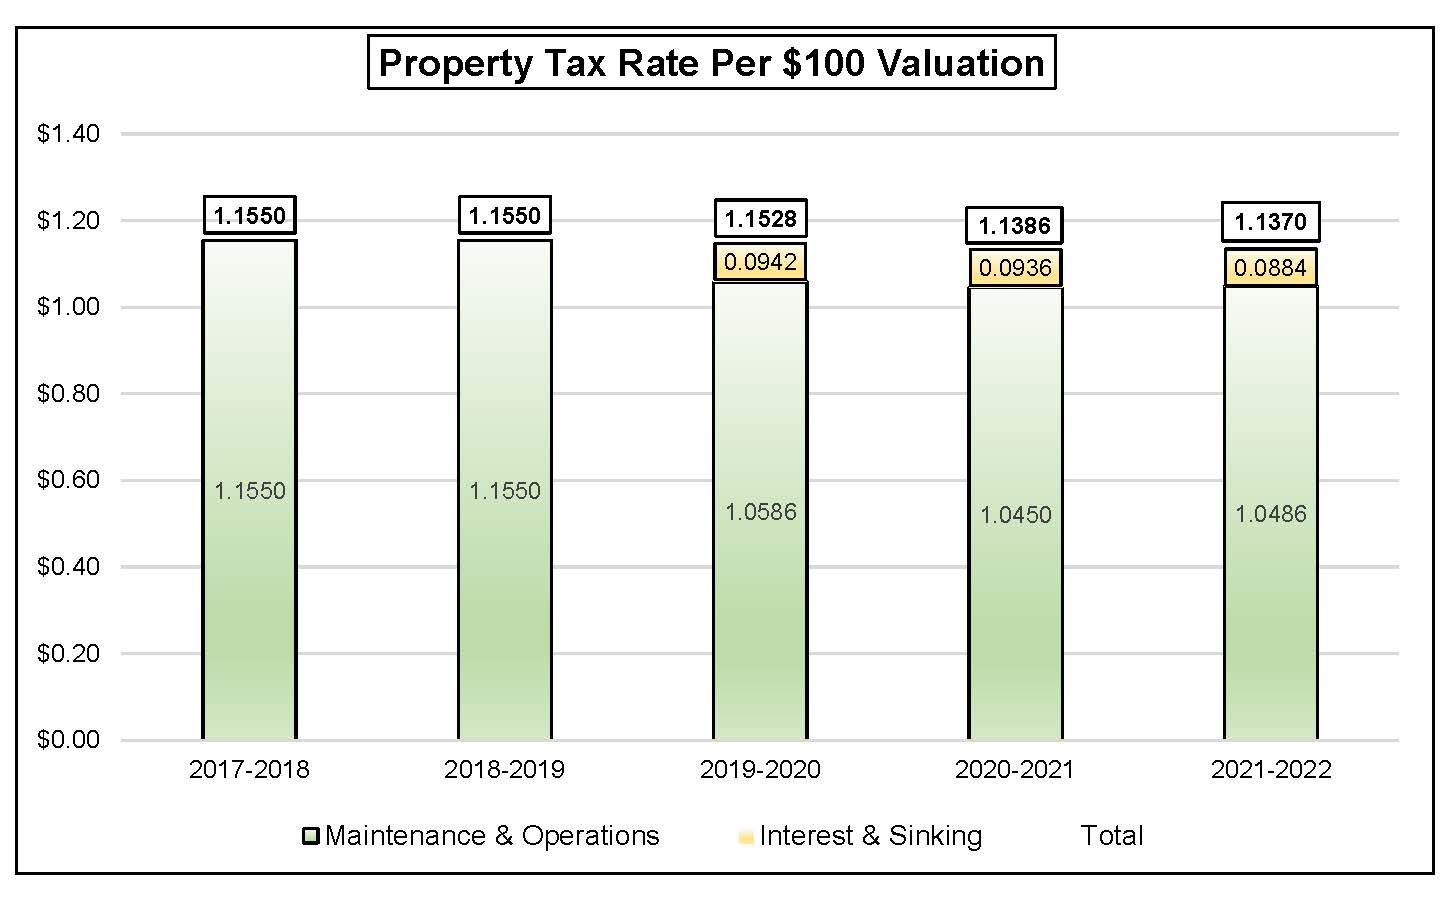 Propert Tax Rate Per $100 Valuation